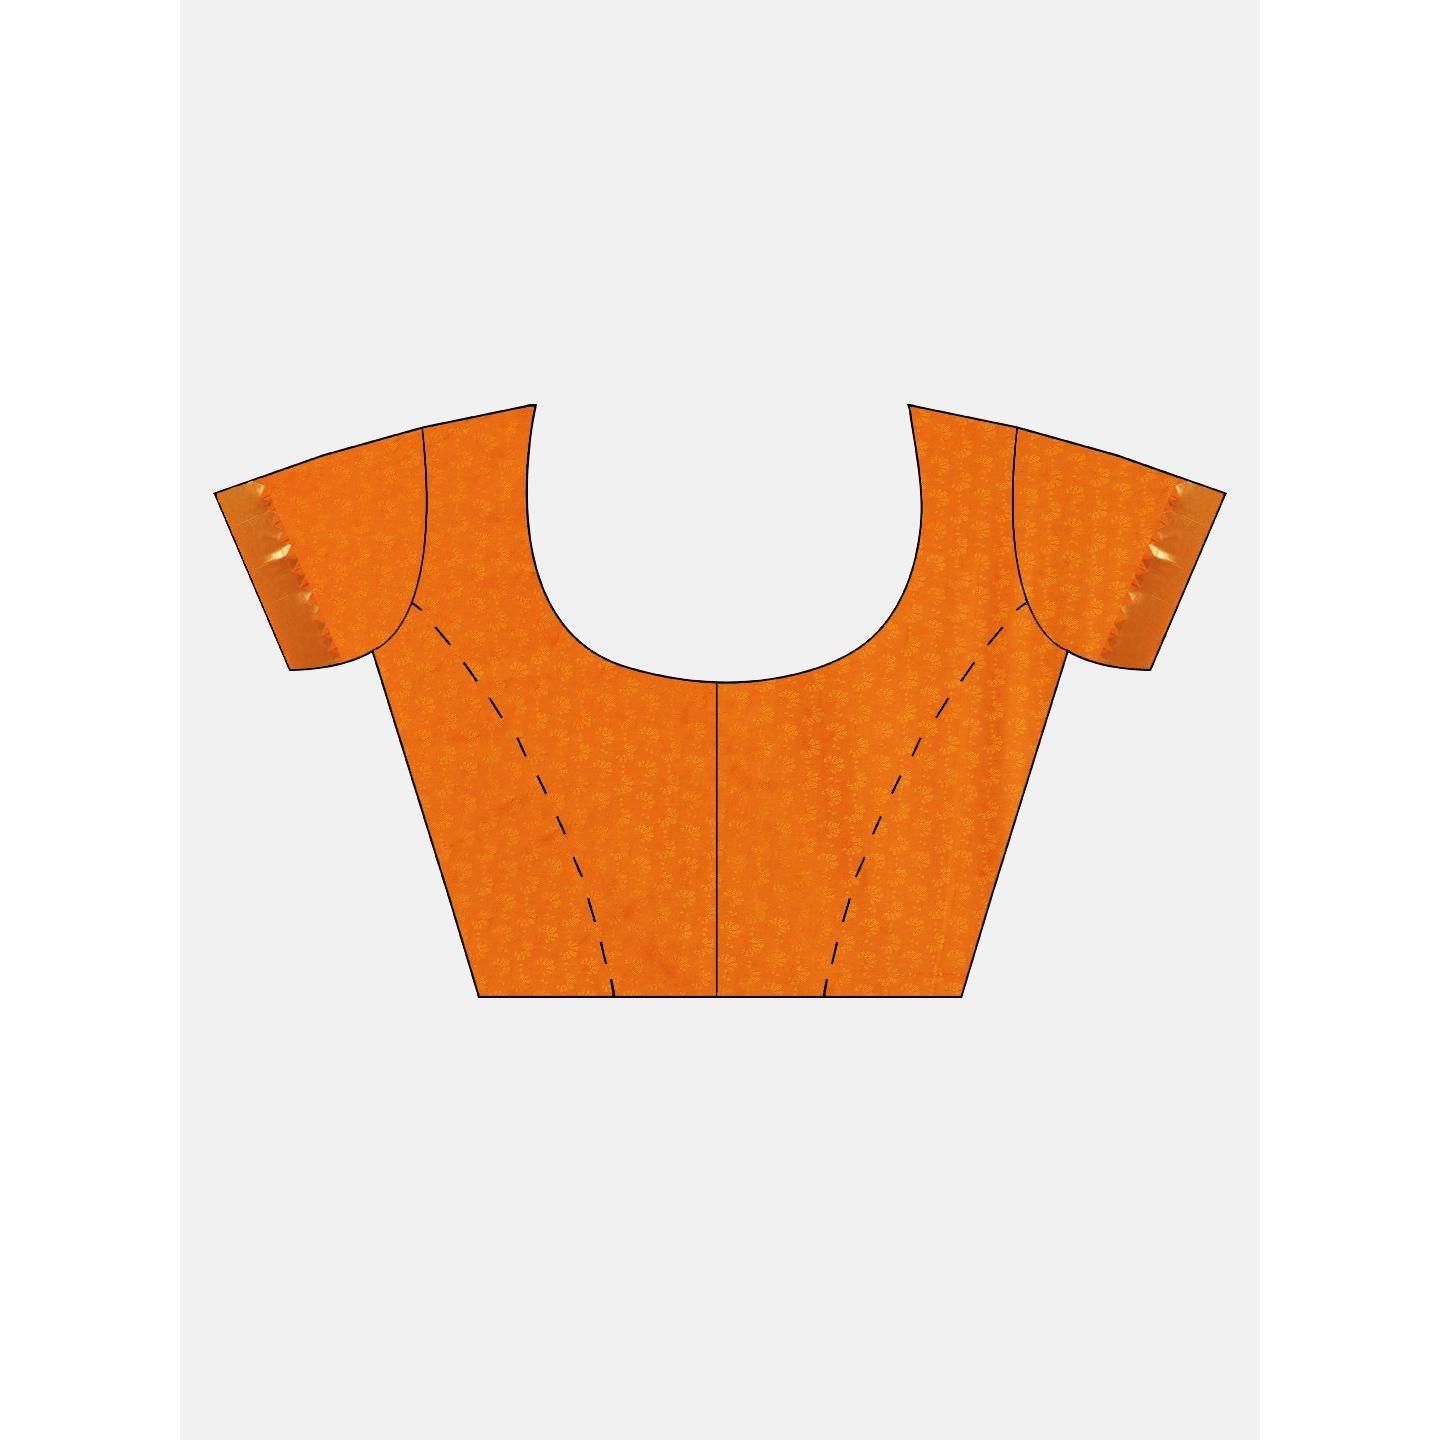 Orange Festive Wear Woven Kanjivaram Silk Saree - Peachmode